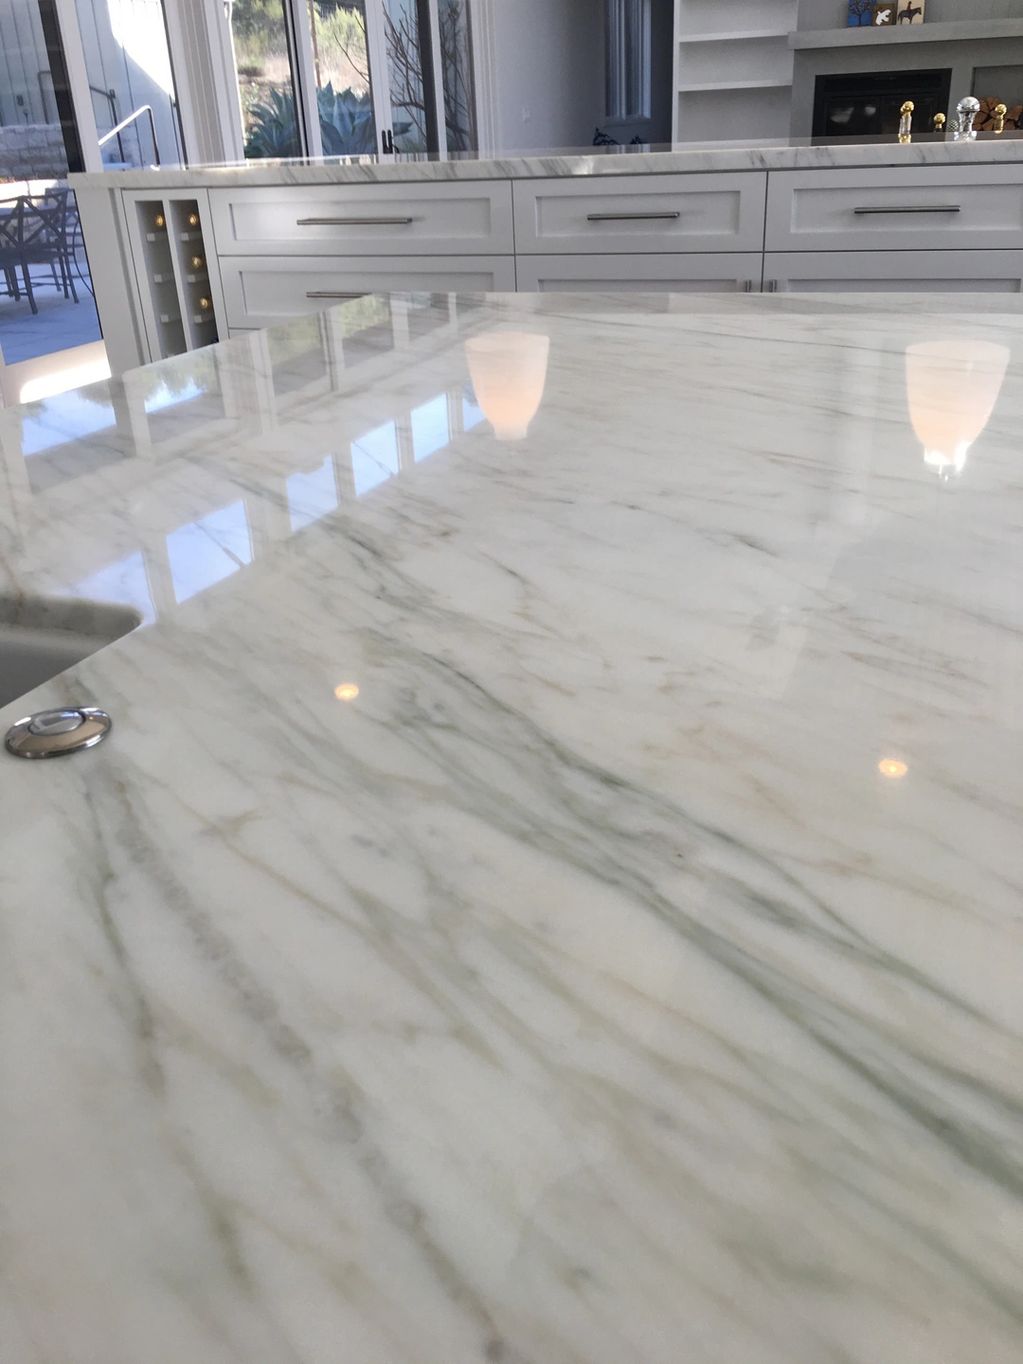 Polished carrera marble kitchen countertop